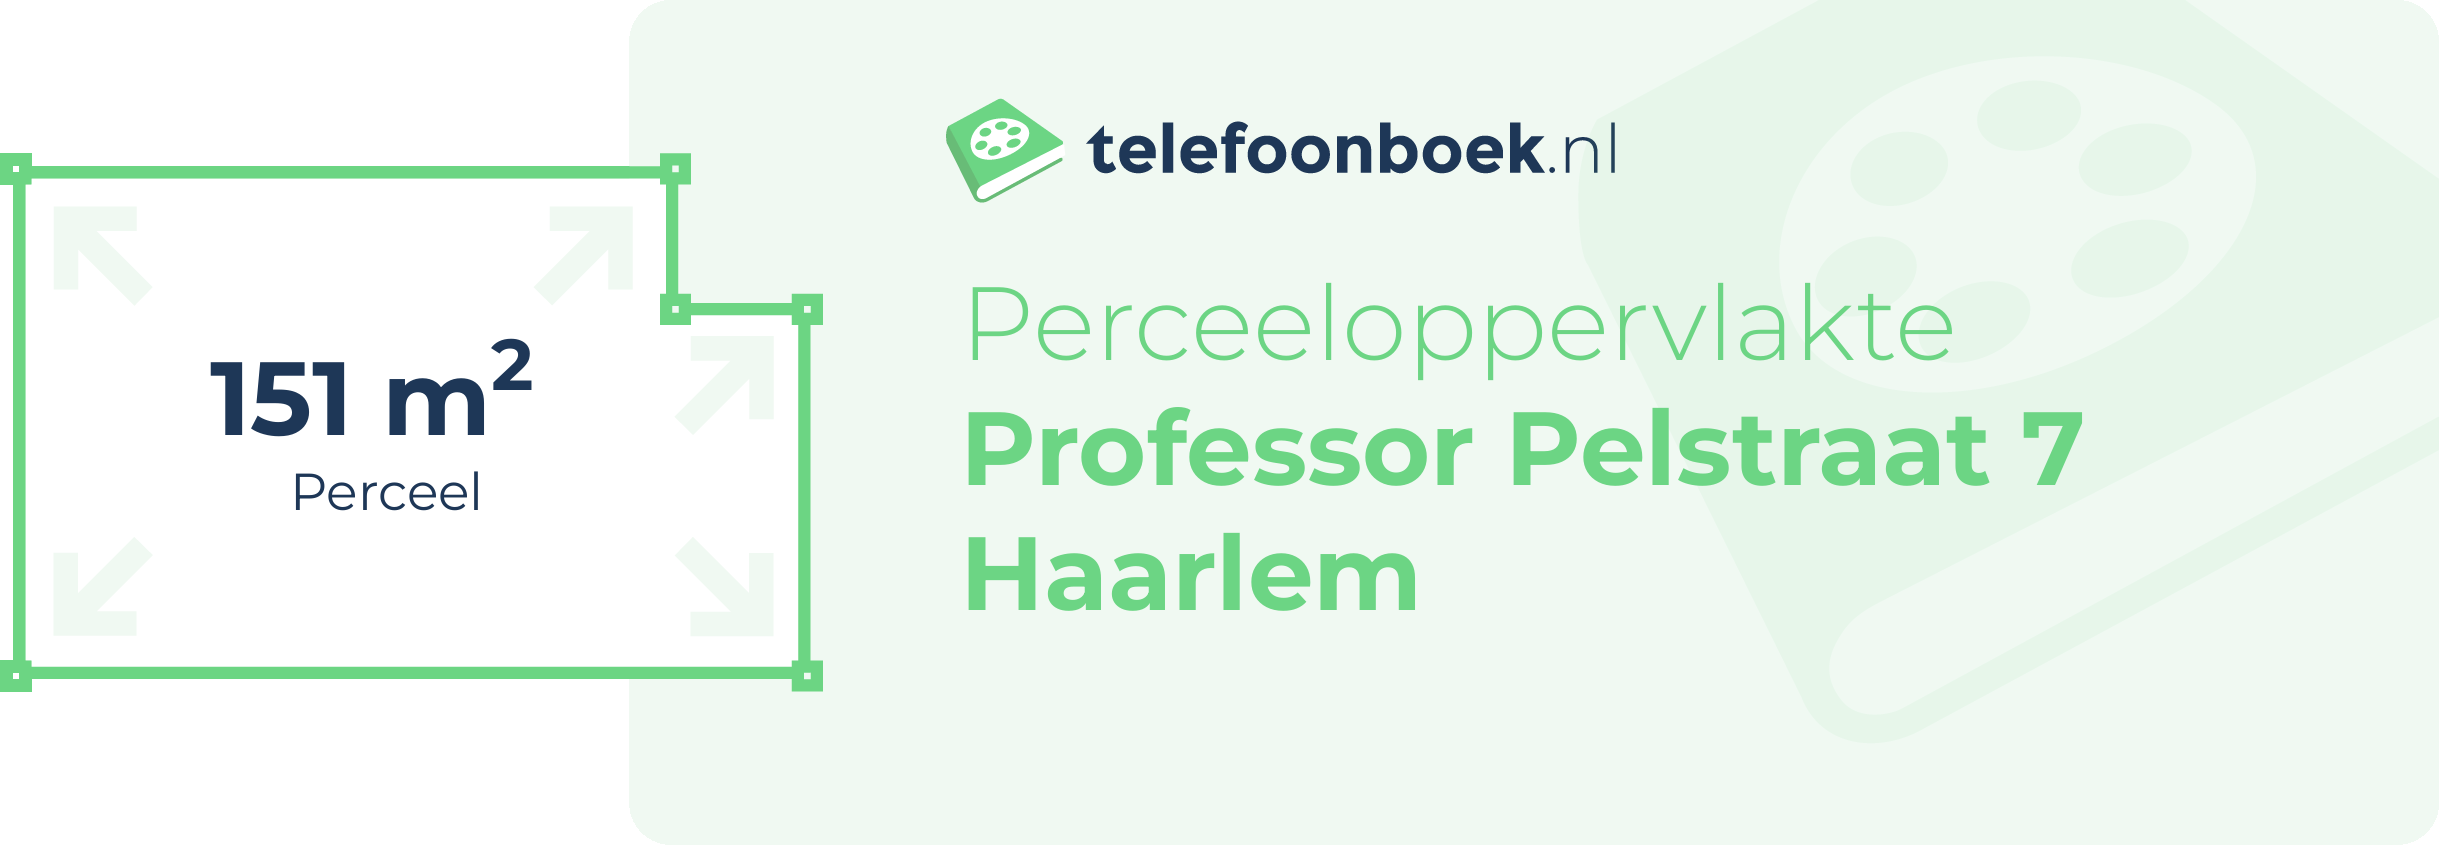 Perceeloppervlakte Professor Pelstraat 7 Haarlem